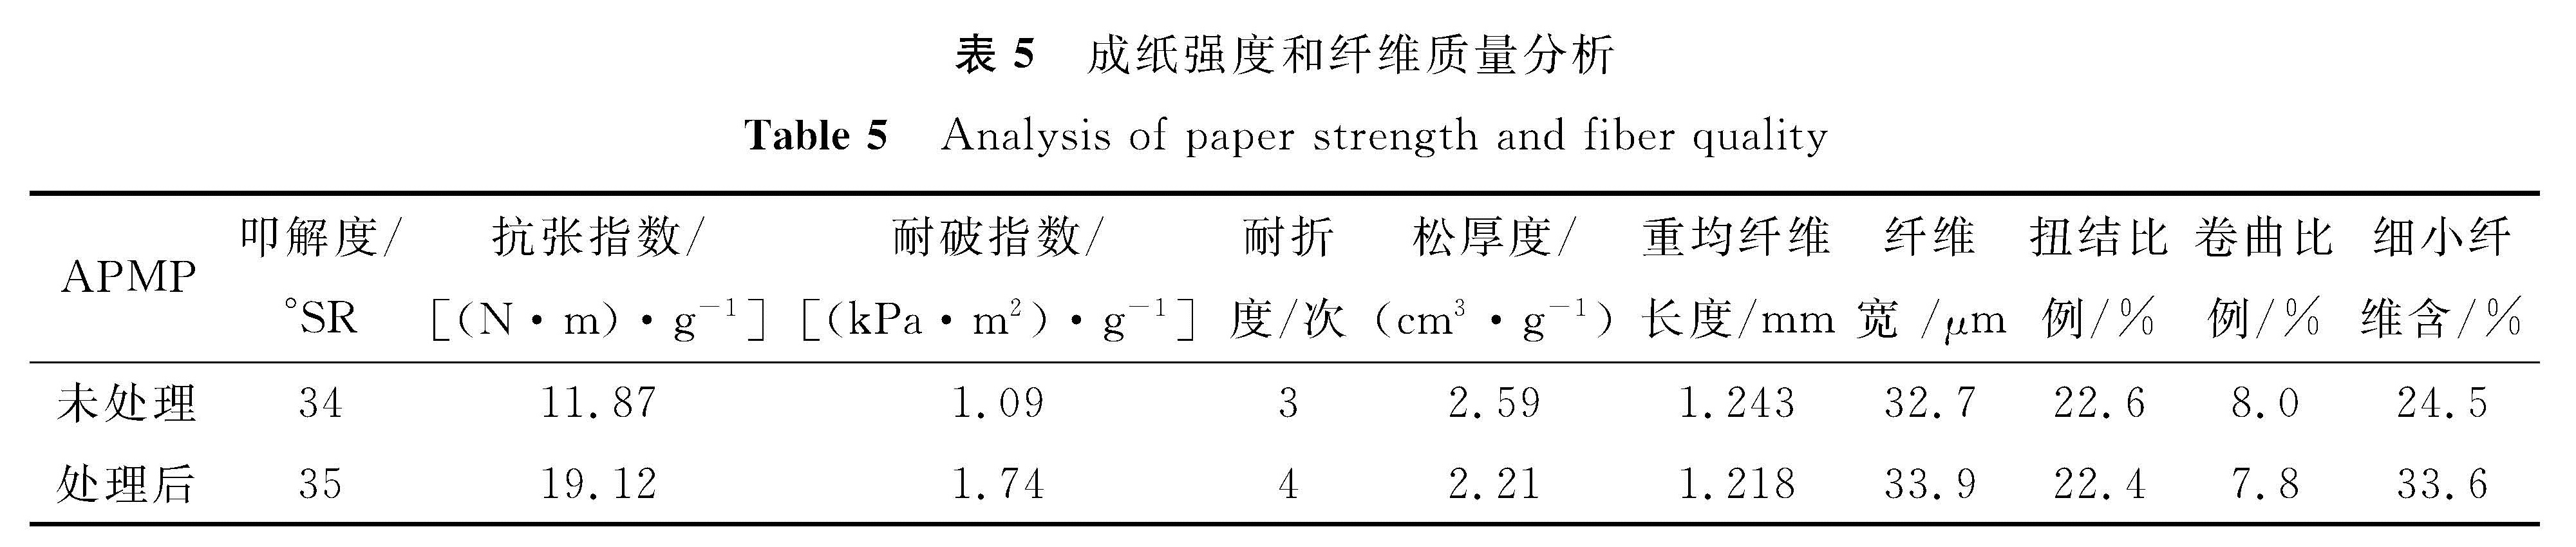 表5 成纸强度和纤维质量分析<br/>Table 5 Analysis of paper strength and fiber quality